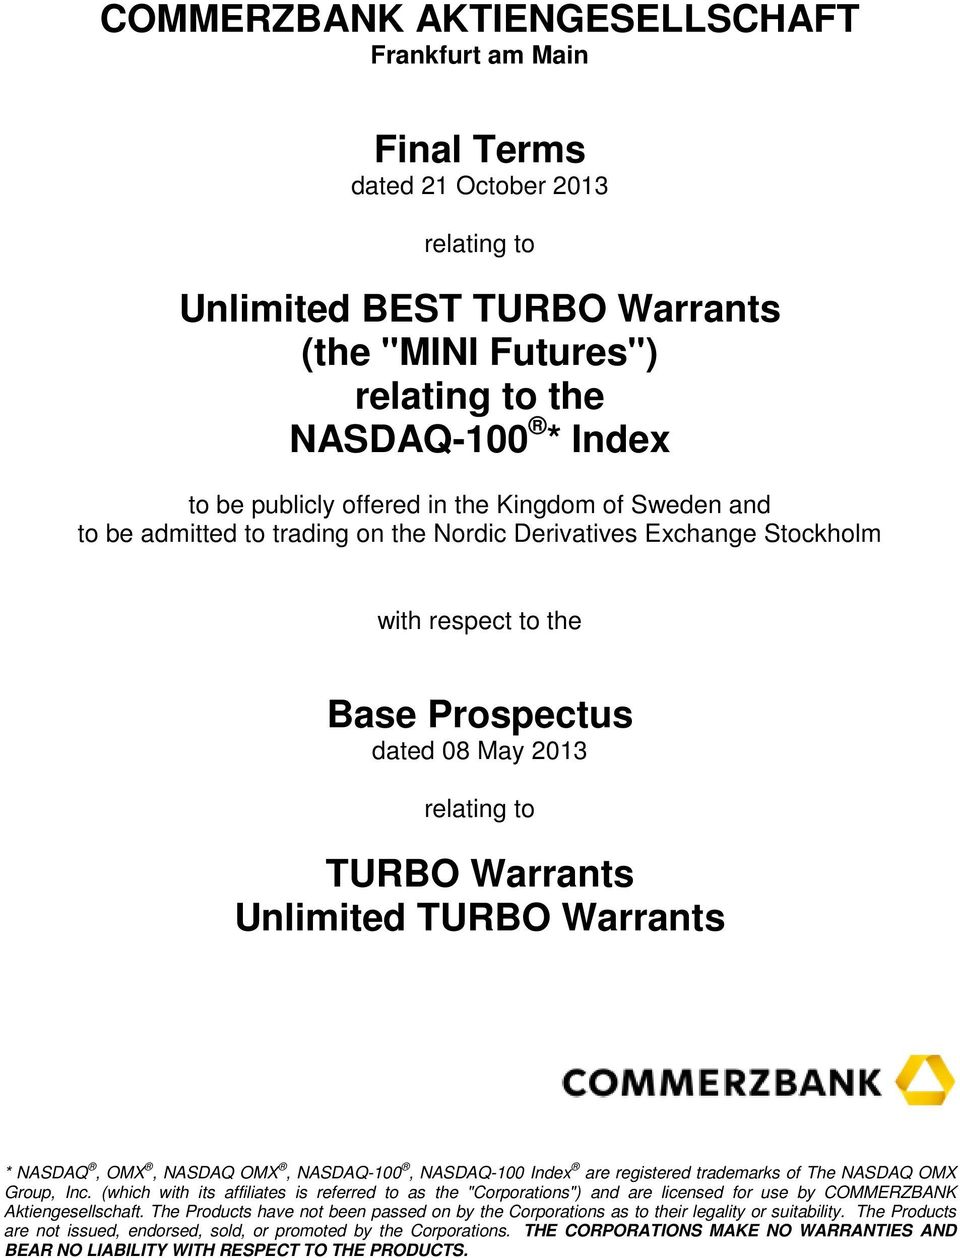 TURBO Warrants * NASDAQ, OMX, NASDAQ OMX, NASDAQ-100, NASDAQ-100 Index are registered trademarks of The NASDAQ OMX Group, Inc.